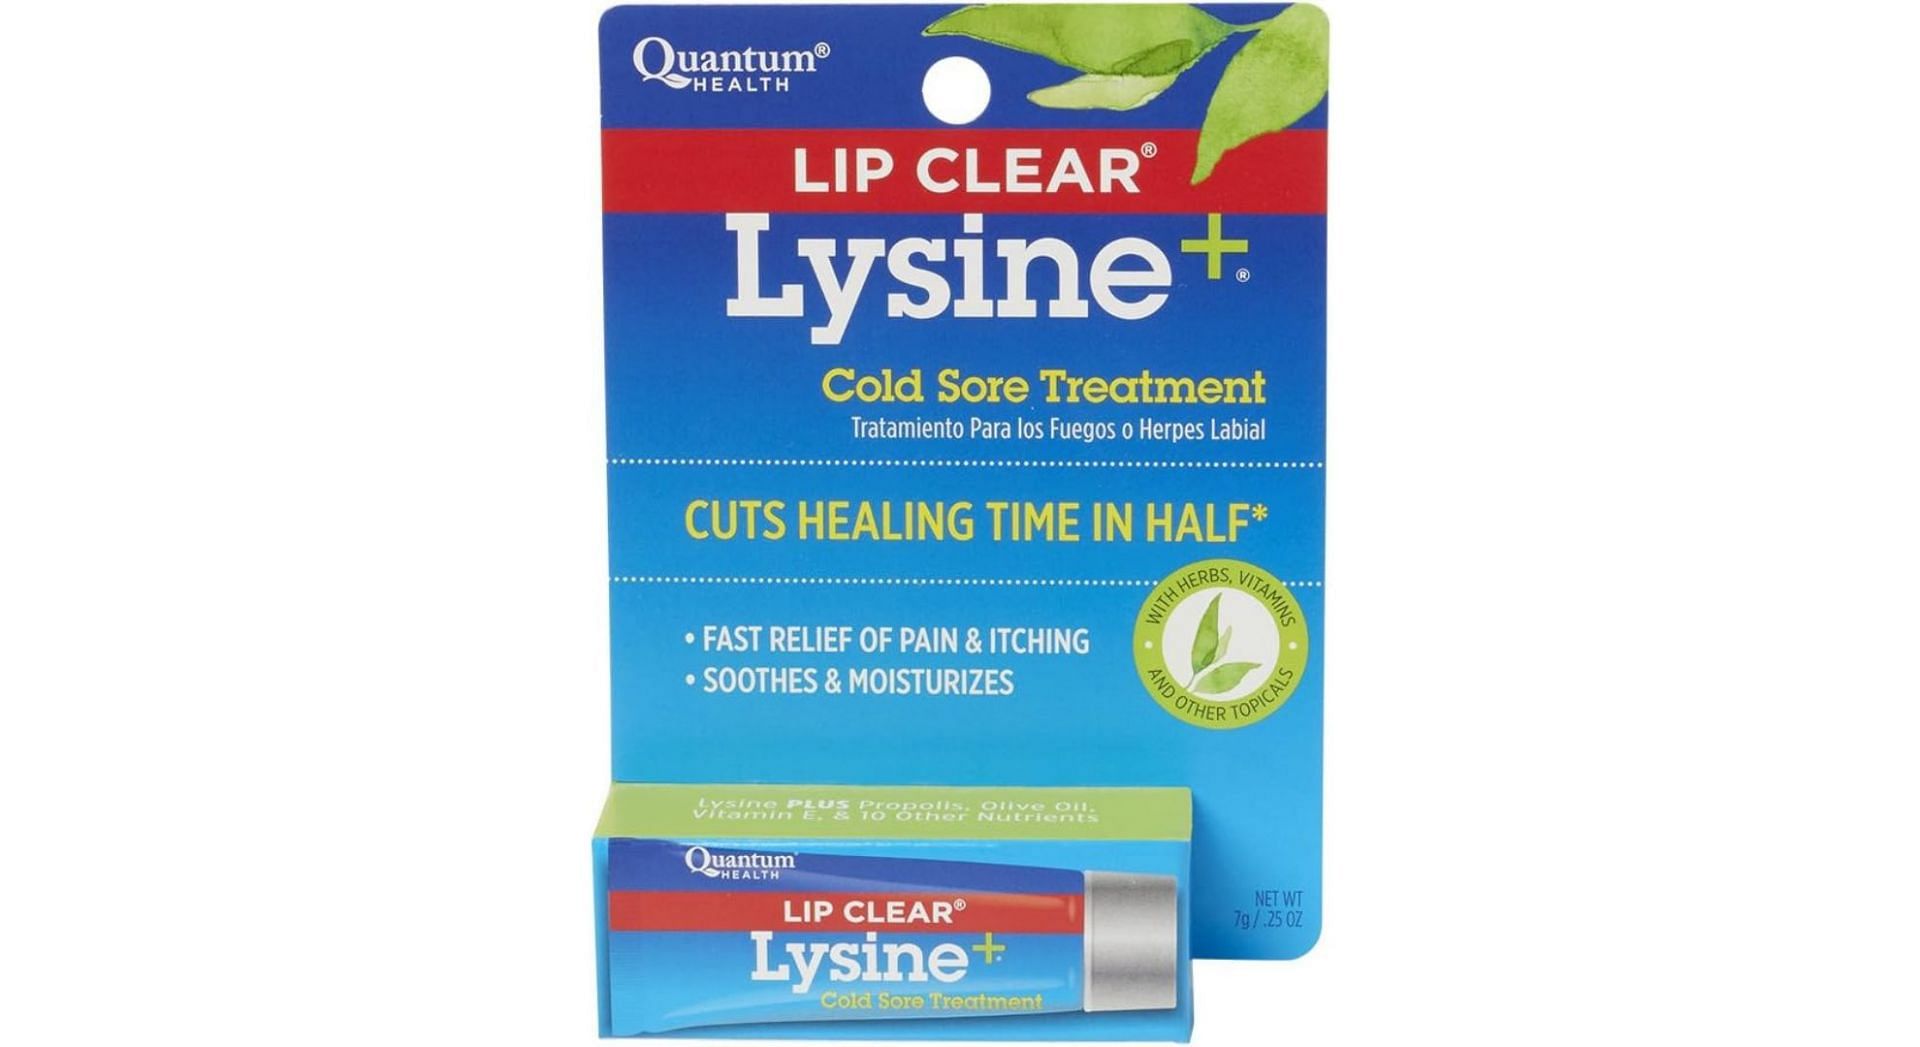 Quantum Health Lip Clear Lysine+ Ointment (Image via Amazon)